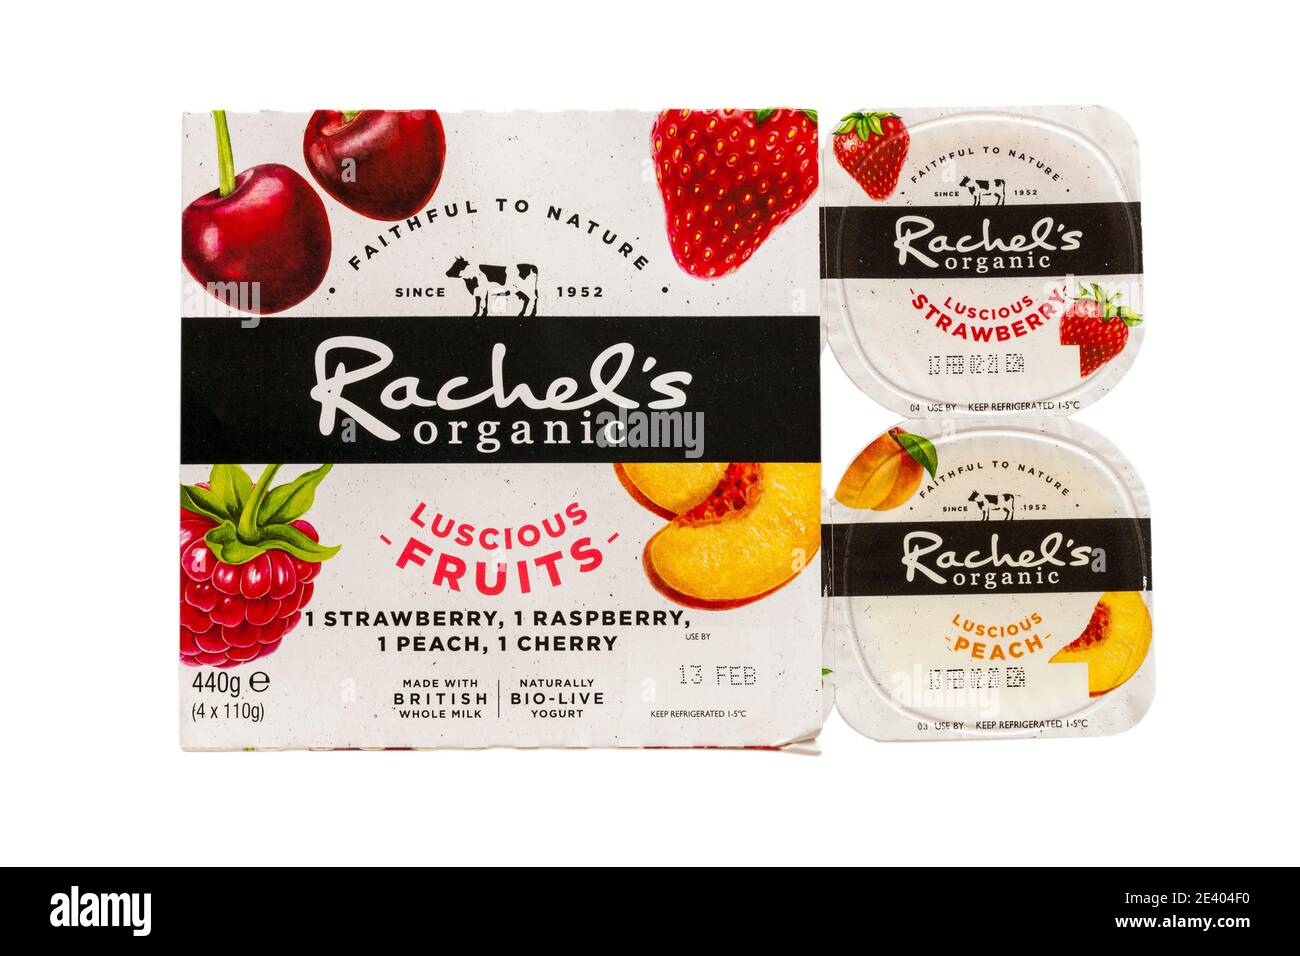 Pack of Rachel's organic Luscious Fruits naturally bio-live yogurts made with British whole milk isolated on white background Stock Photo